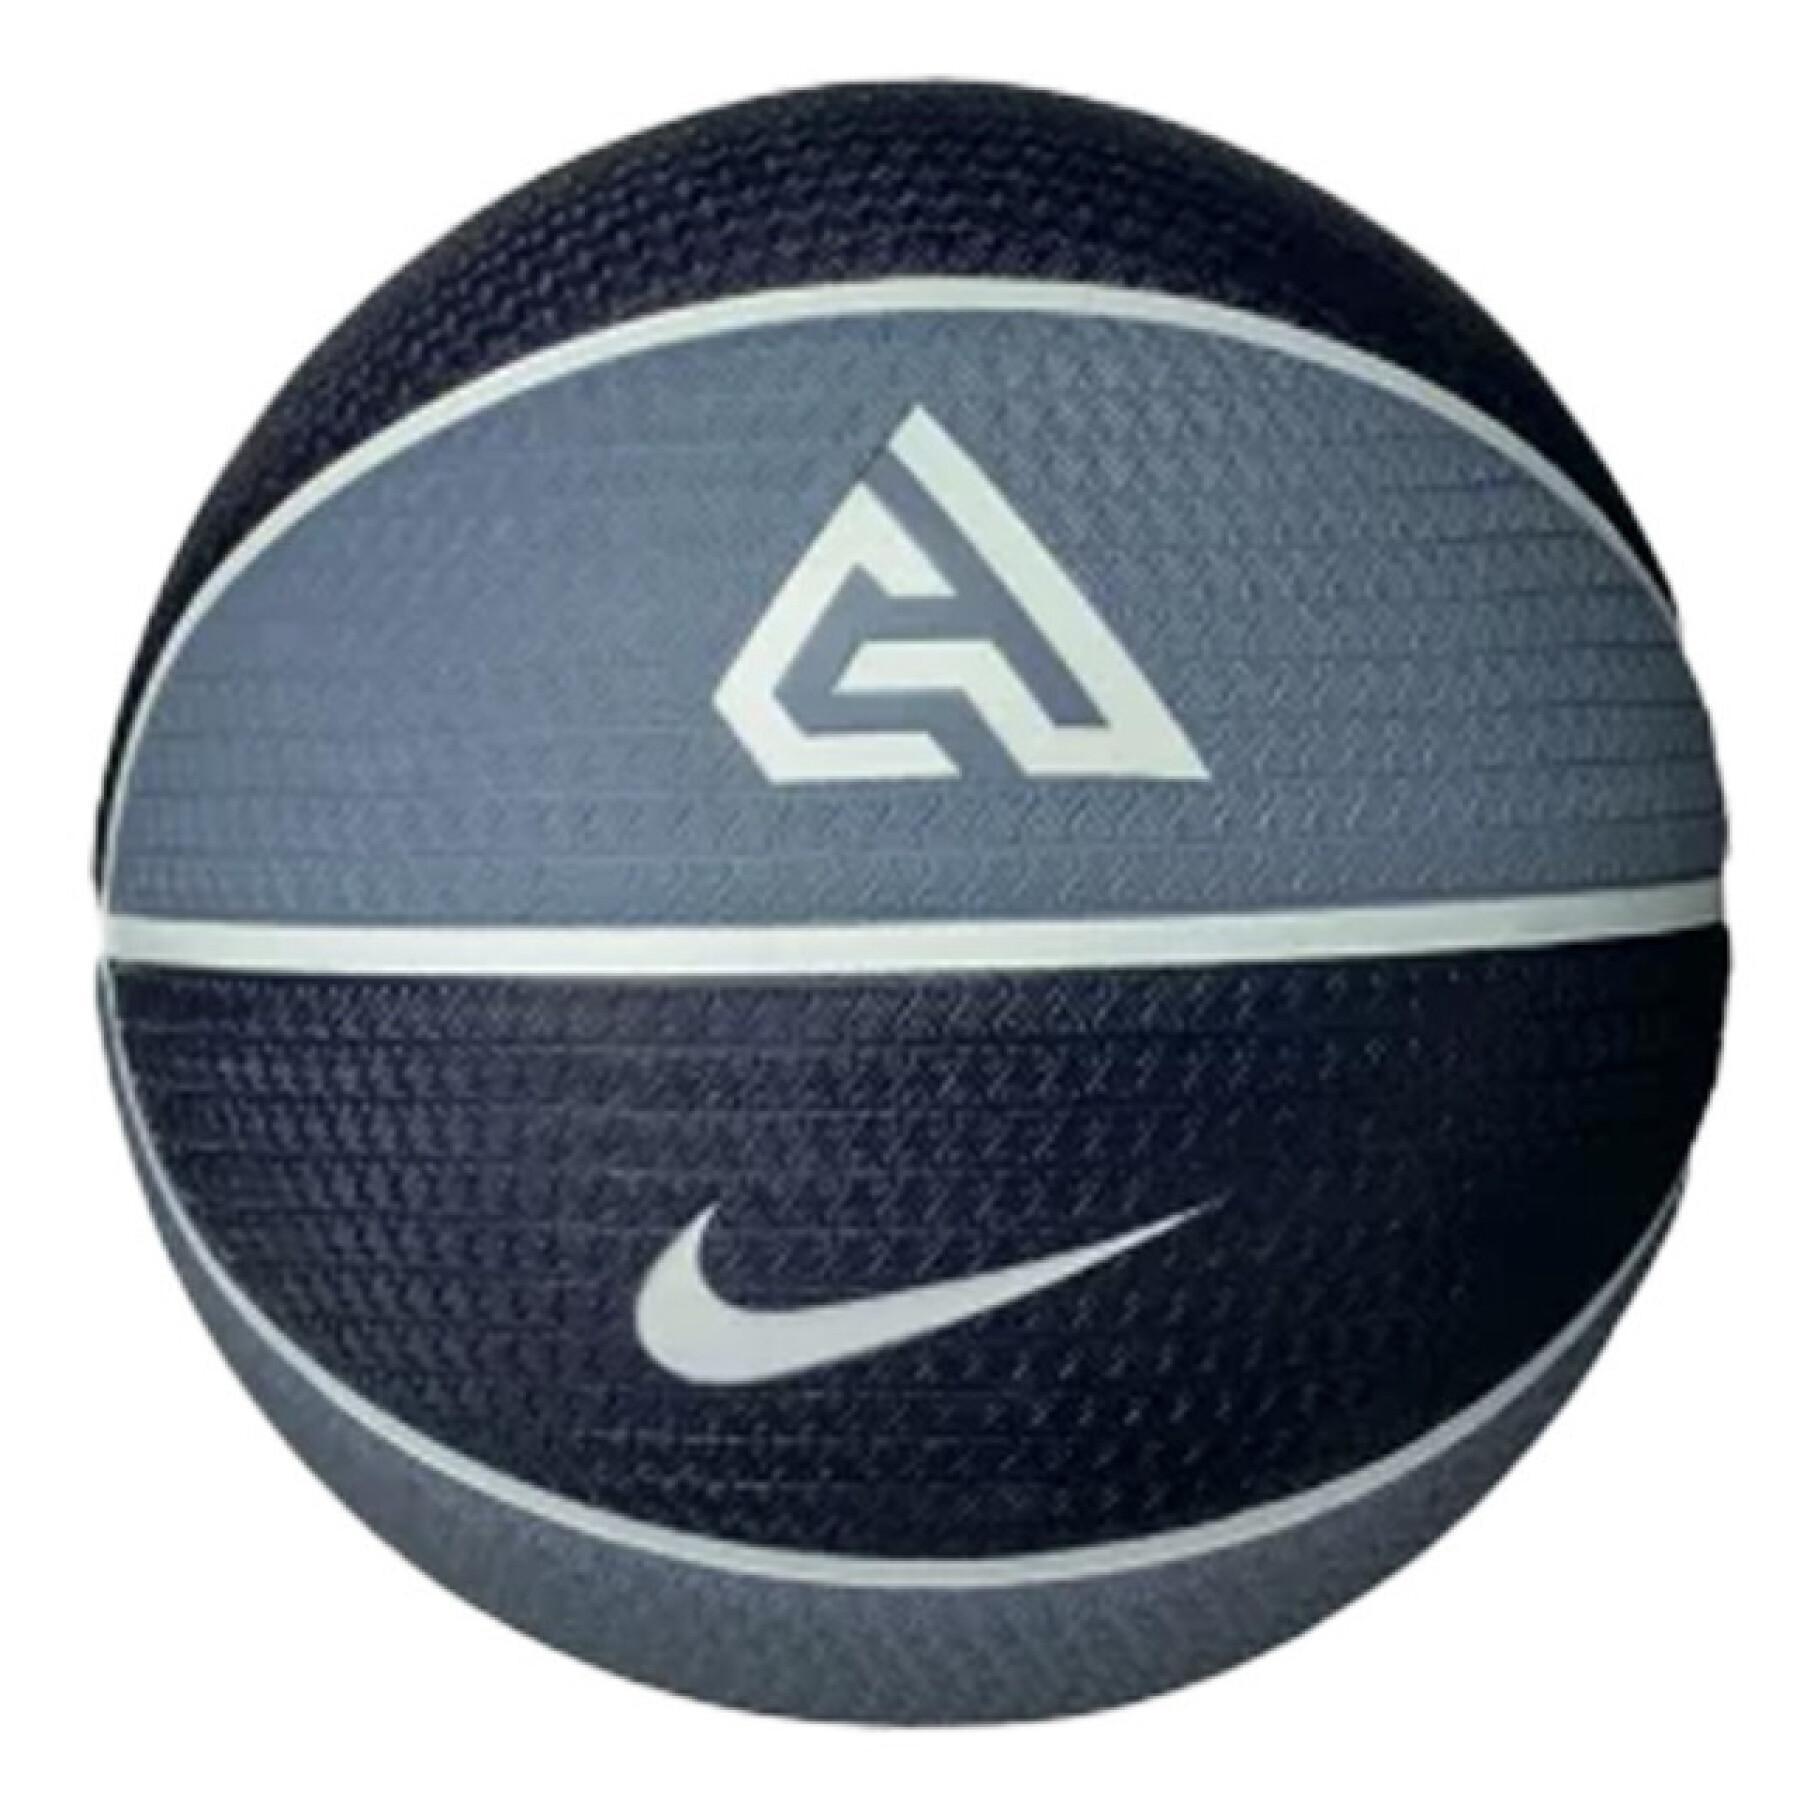 Piłka do koszykówki Nike Playground 8P 2.0 G Antetokounmpo Deflated